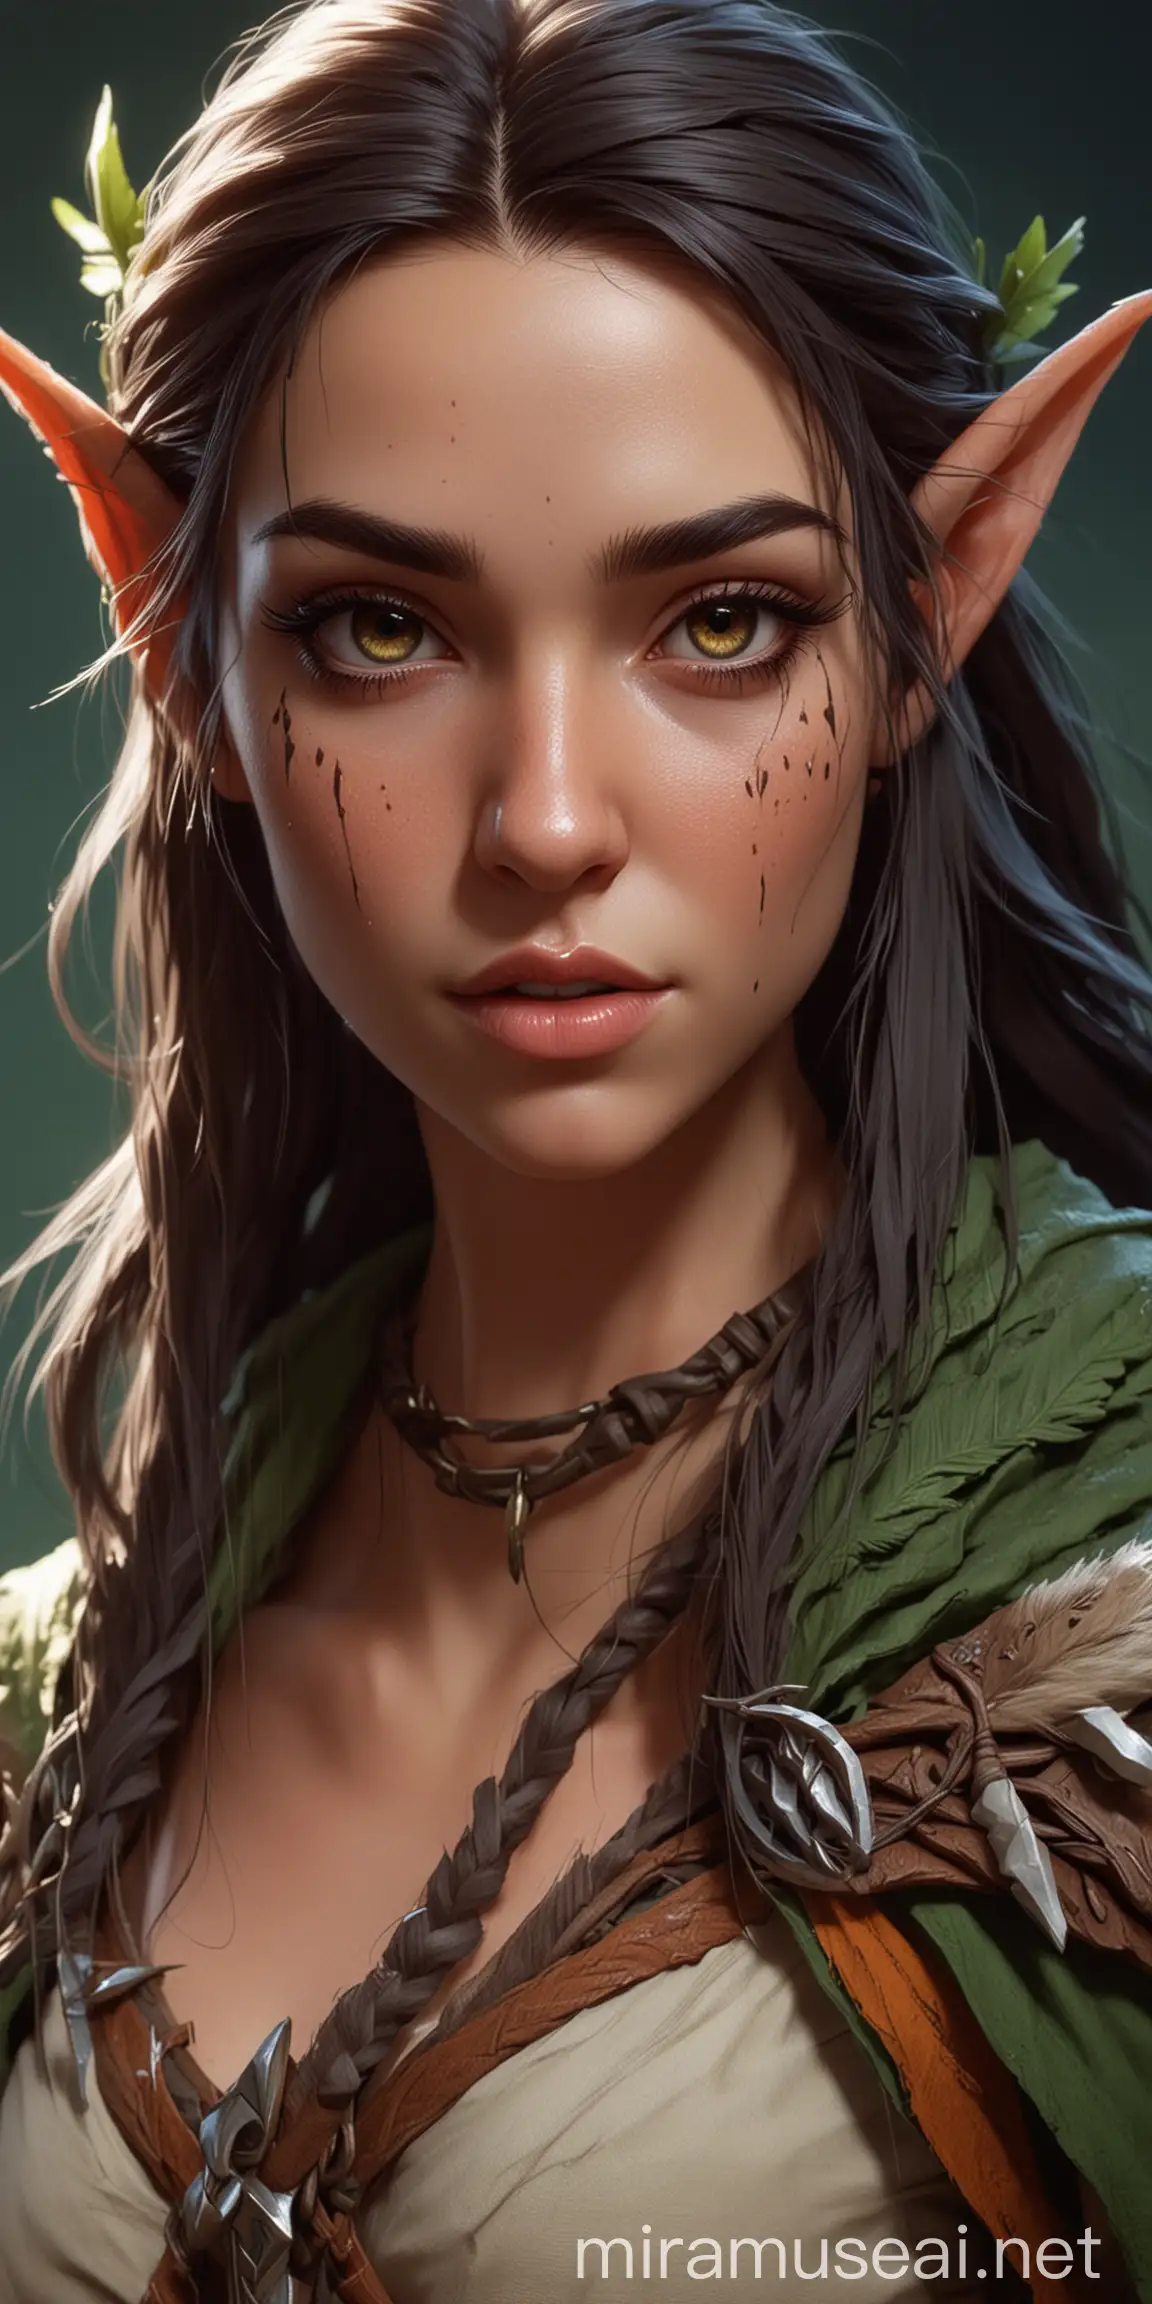 Cel-shaded, large facial scar, elf female druid wild fantasy magic fighter, half body shot by loisvb/rossdraws/samdoesart stylized trending on artstation saturated colors high detail procreate